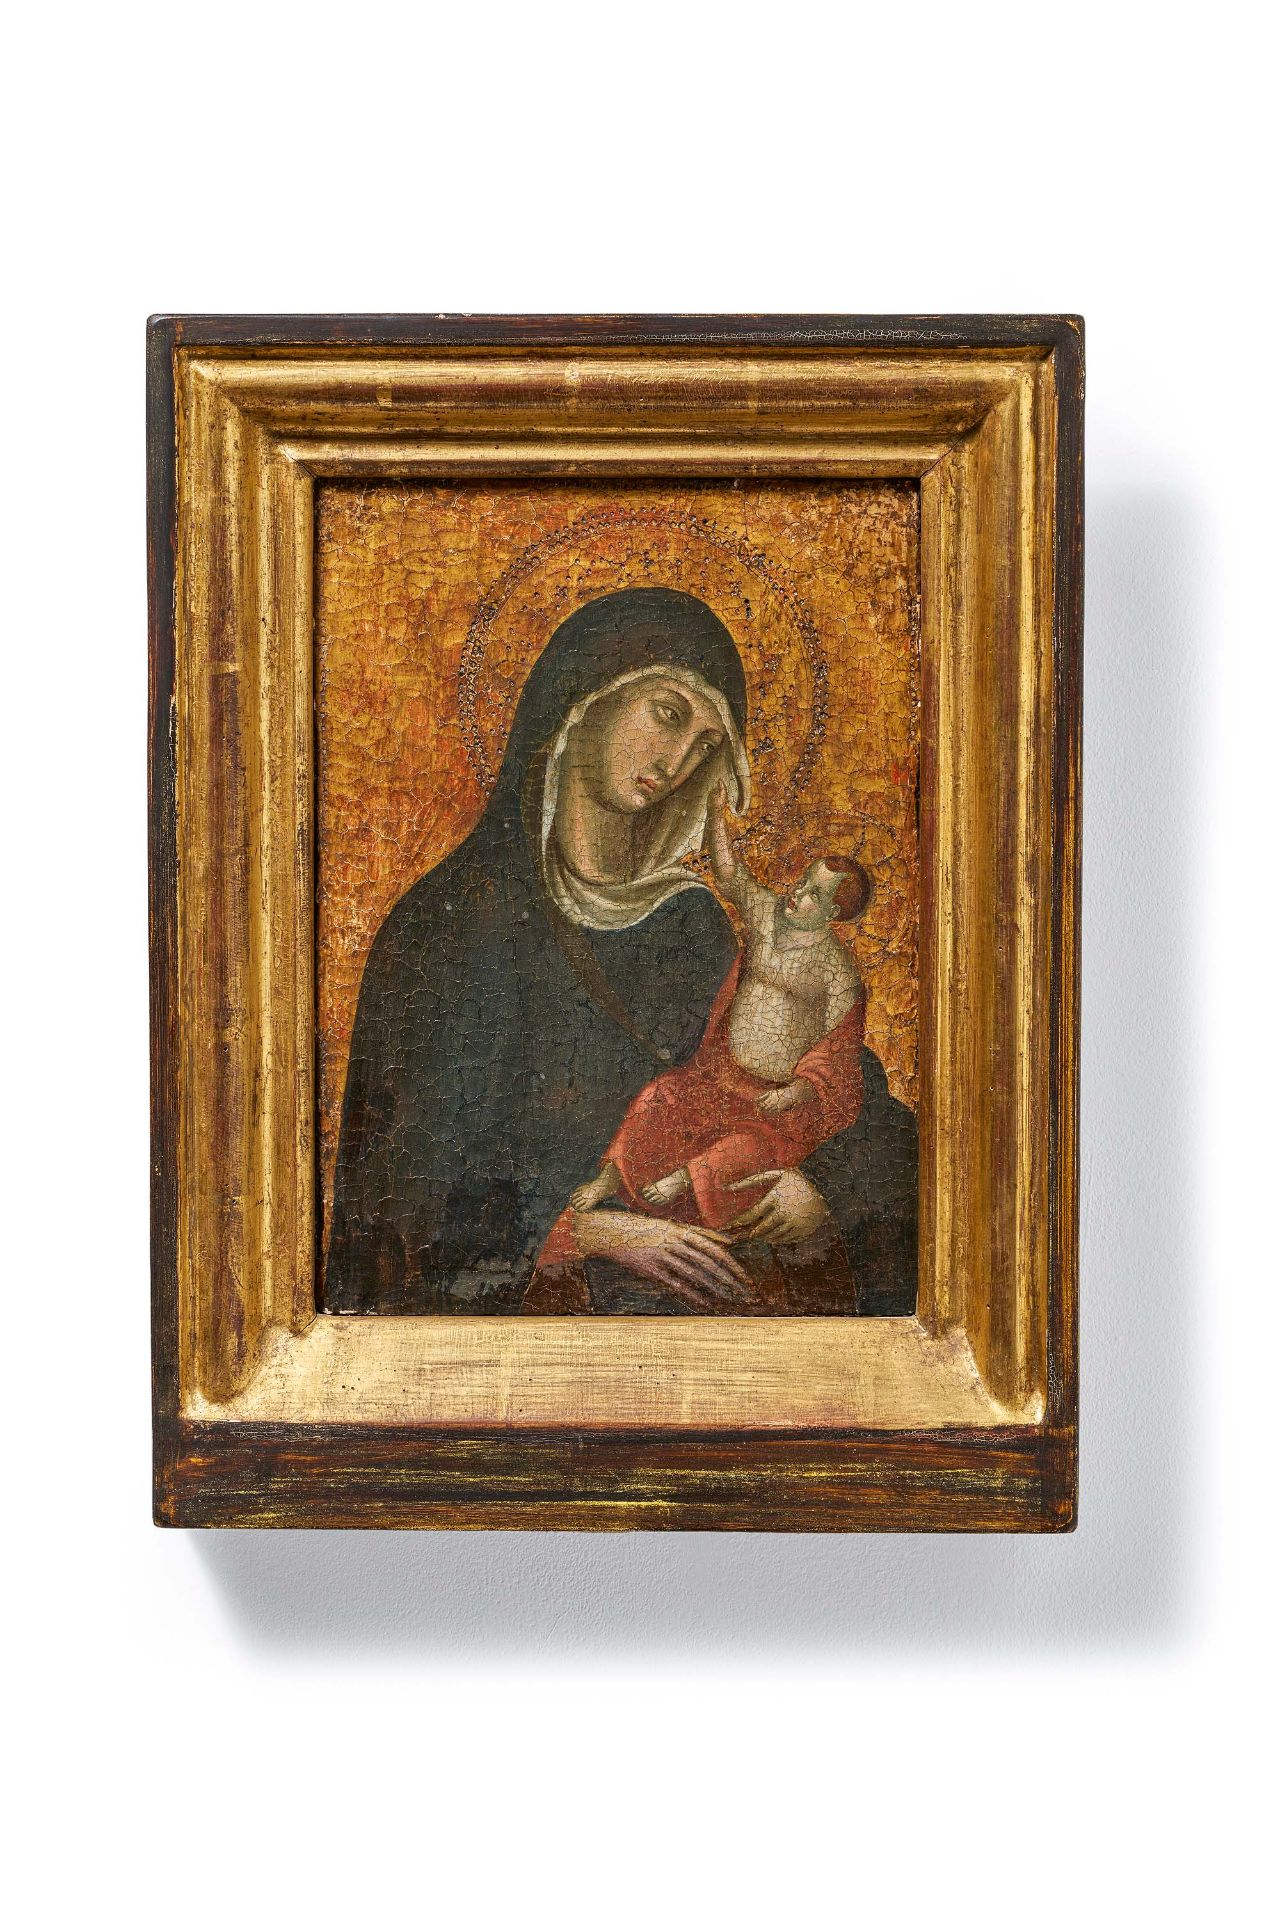 Sienese School. Madonna with the Christ Child